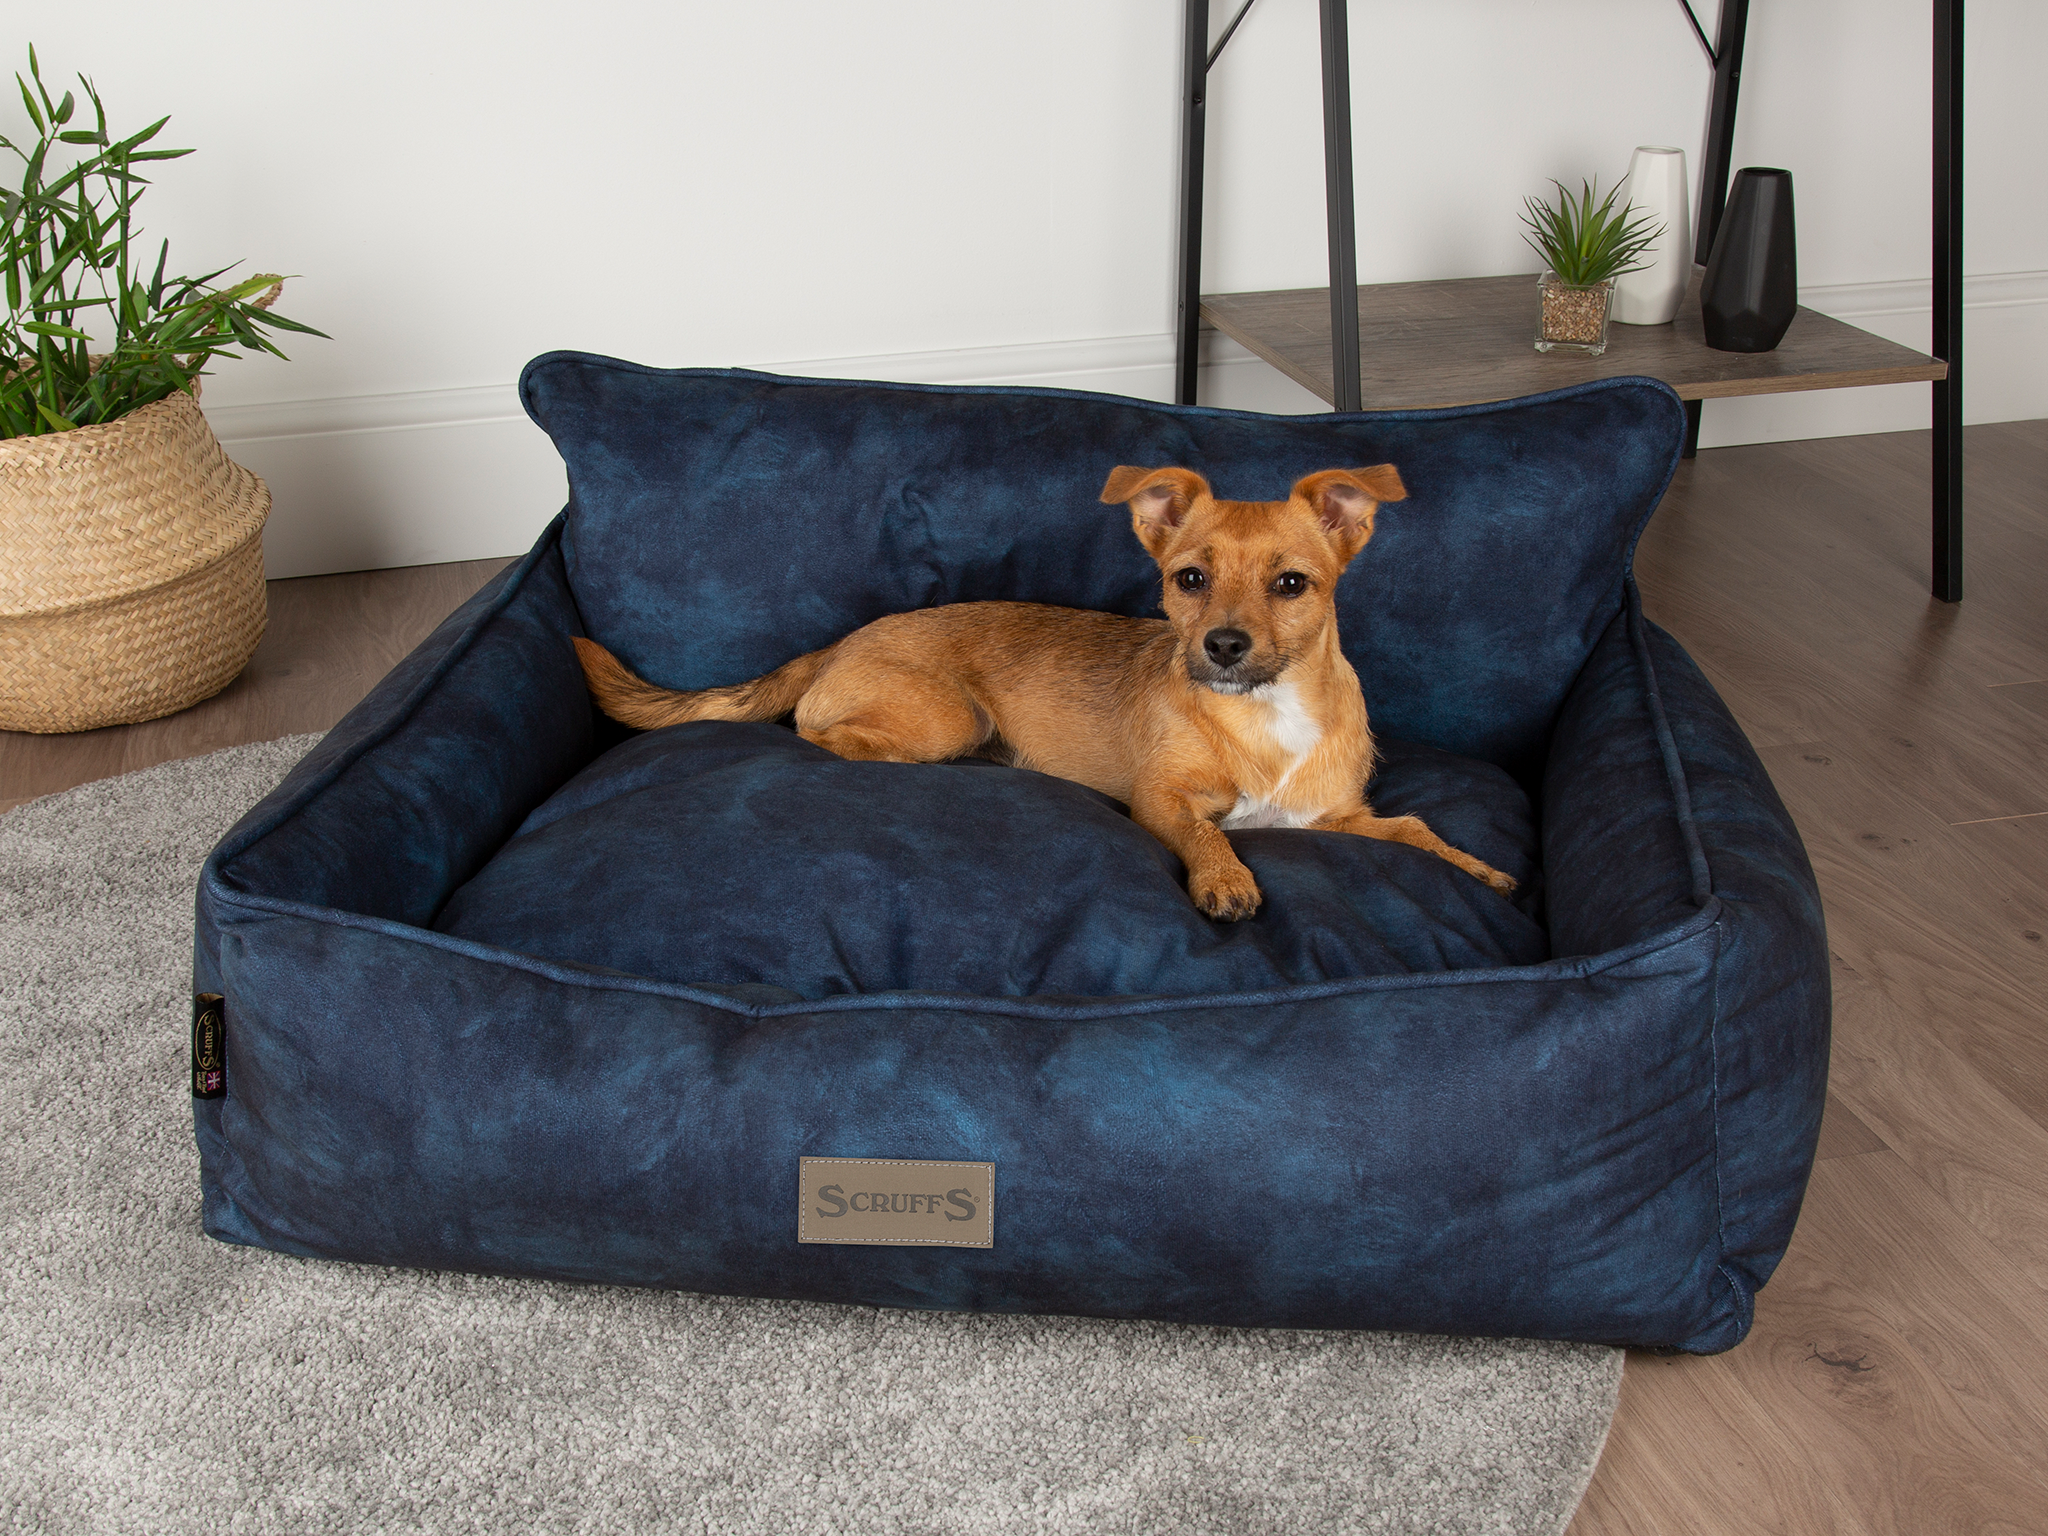 Lampshades Ideal To Match Dog Duvets Dog Cushions Dog Wall Art & Dog Wallpaper. 